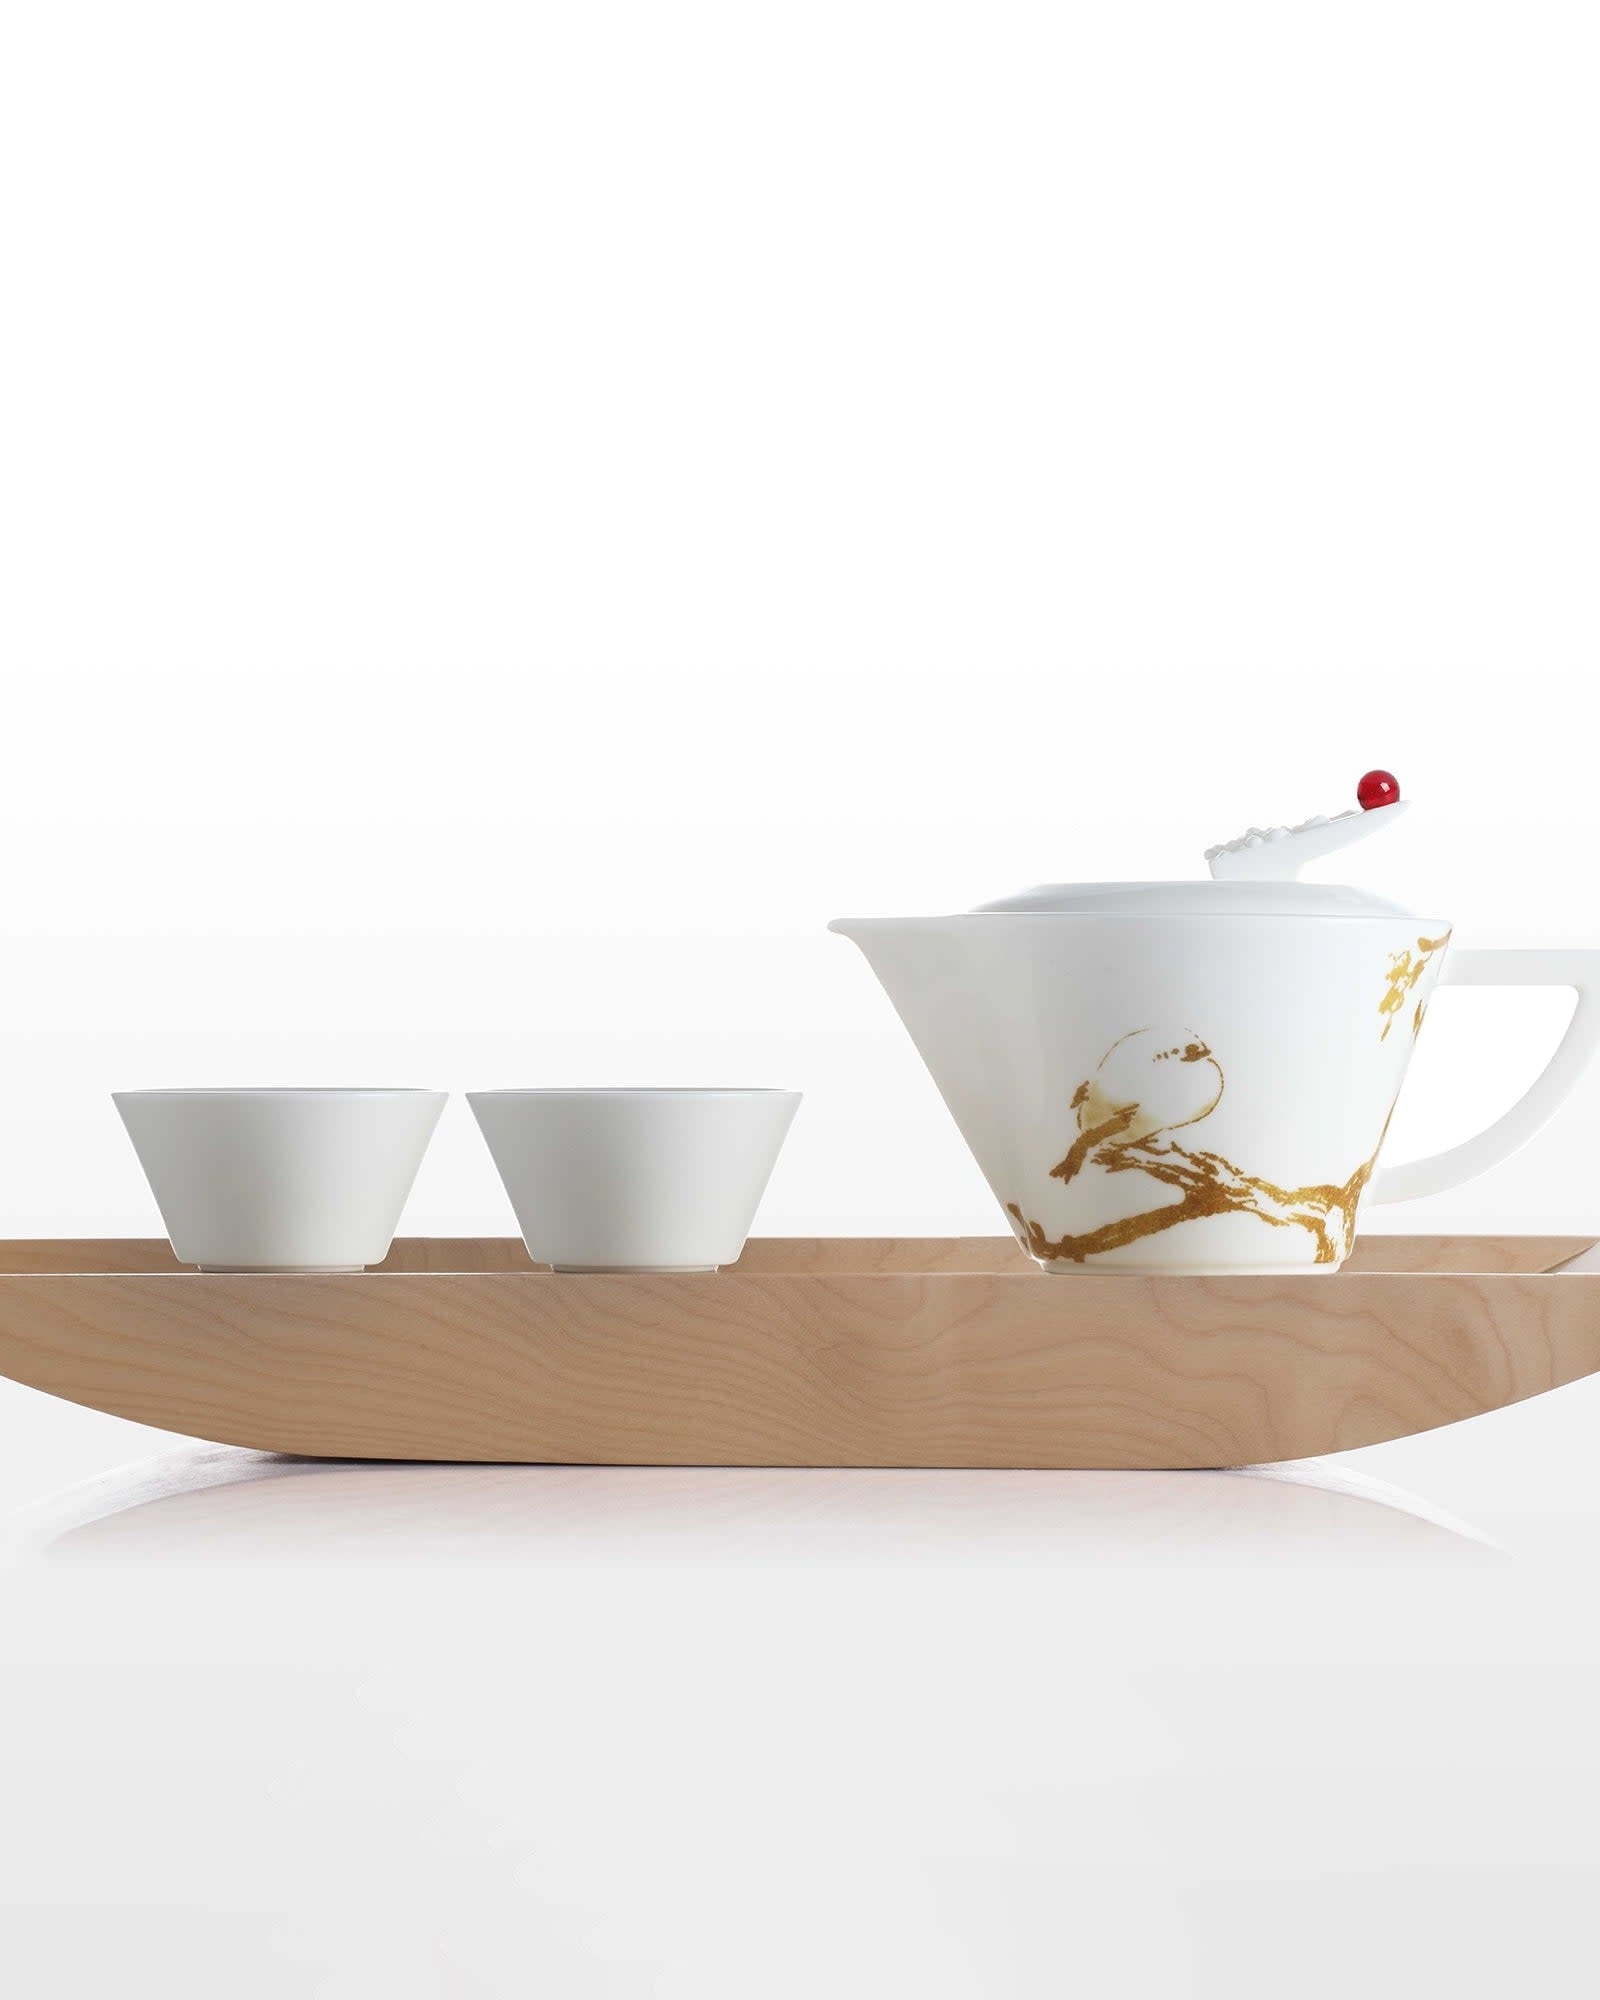 LIULI Crystal Art Tea Set, Bone China, "Plump Little Bird"